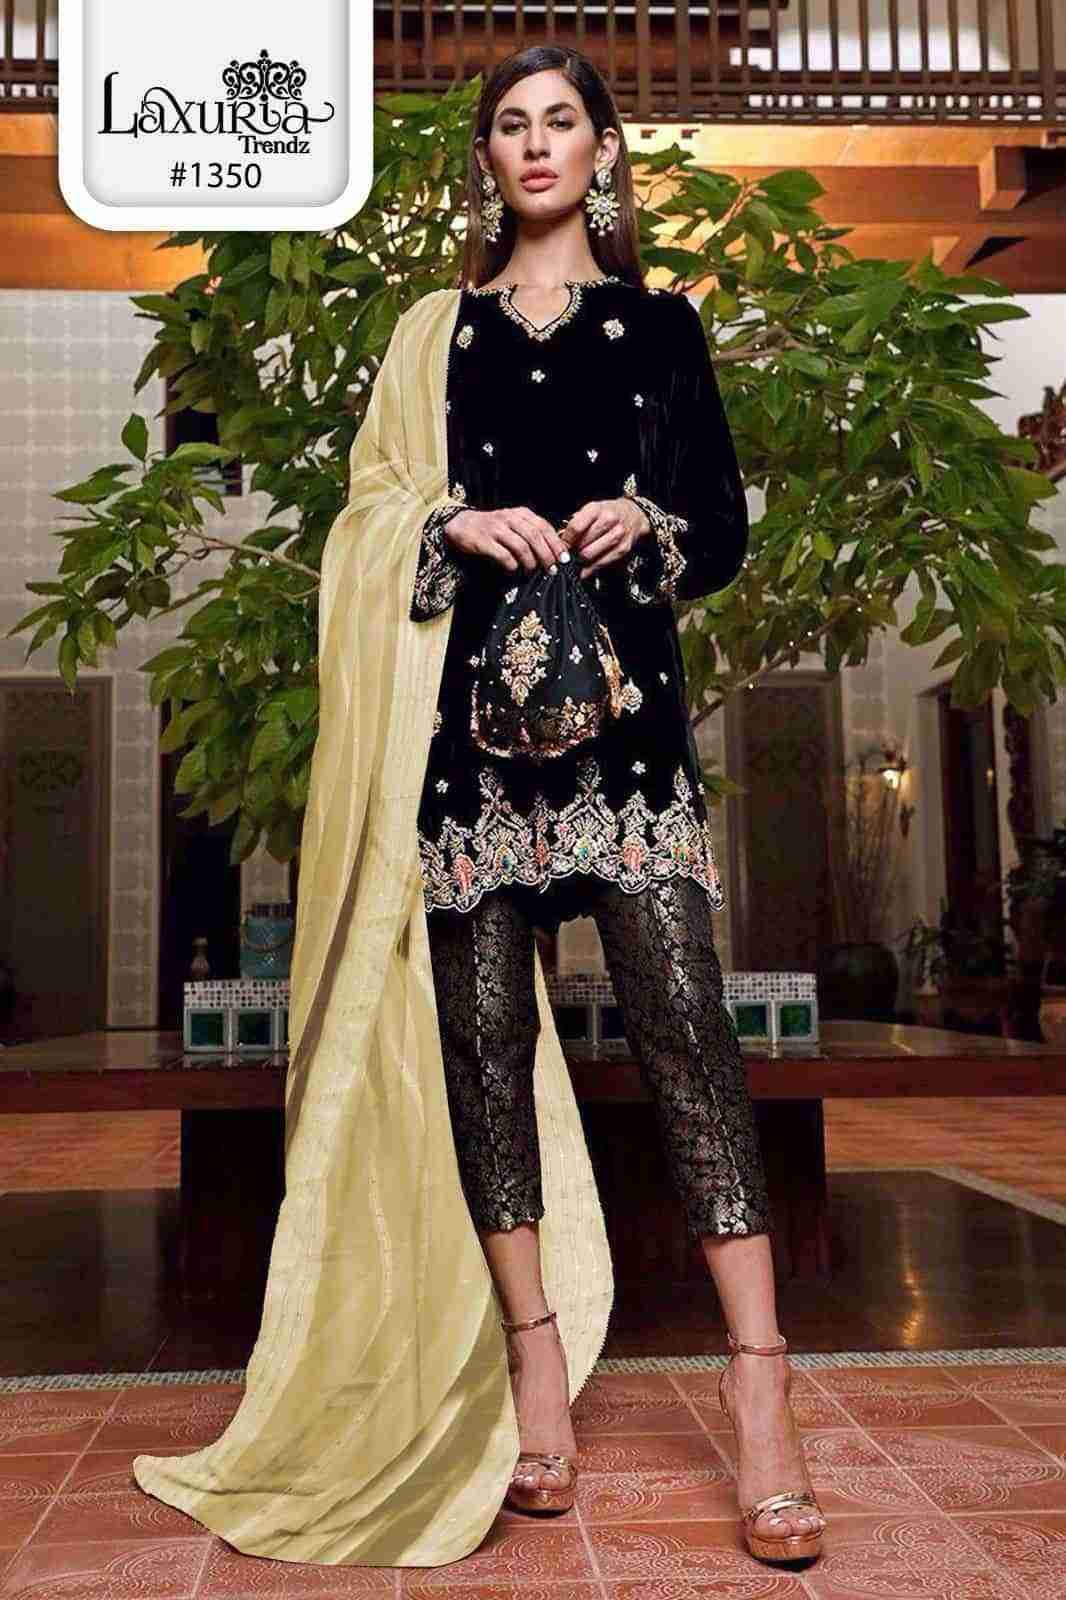 Pakistani Salwar Suit